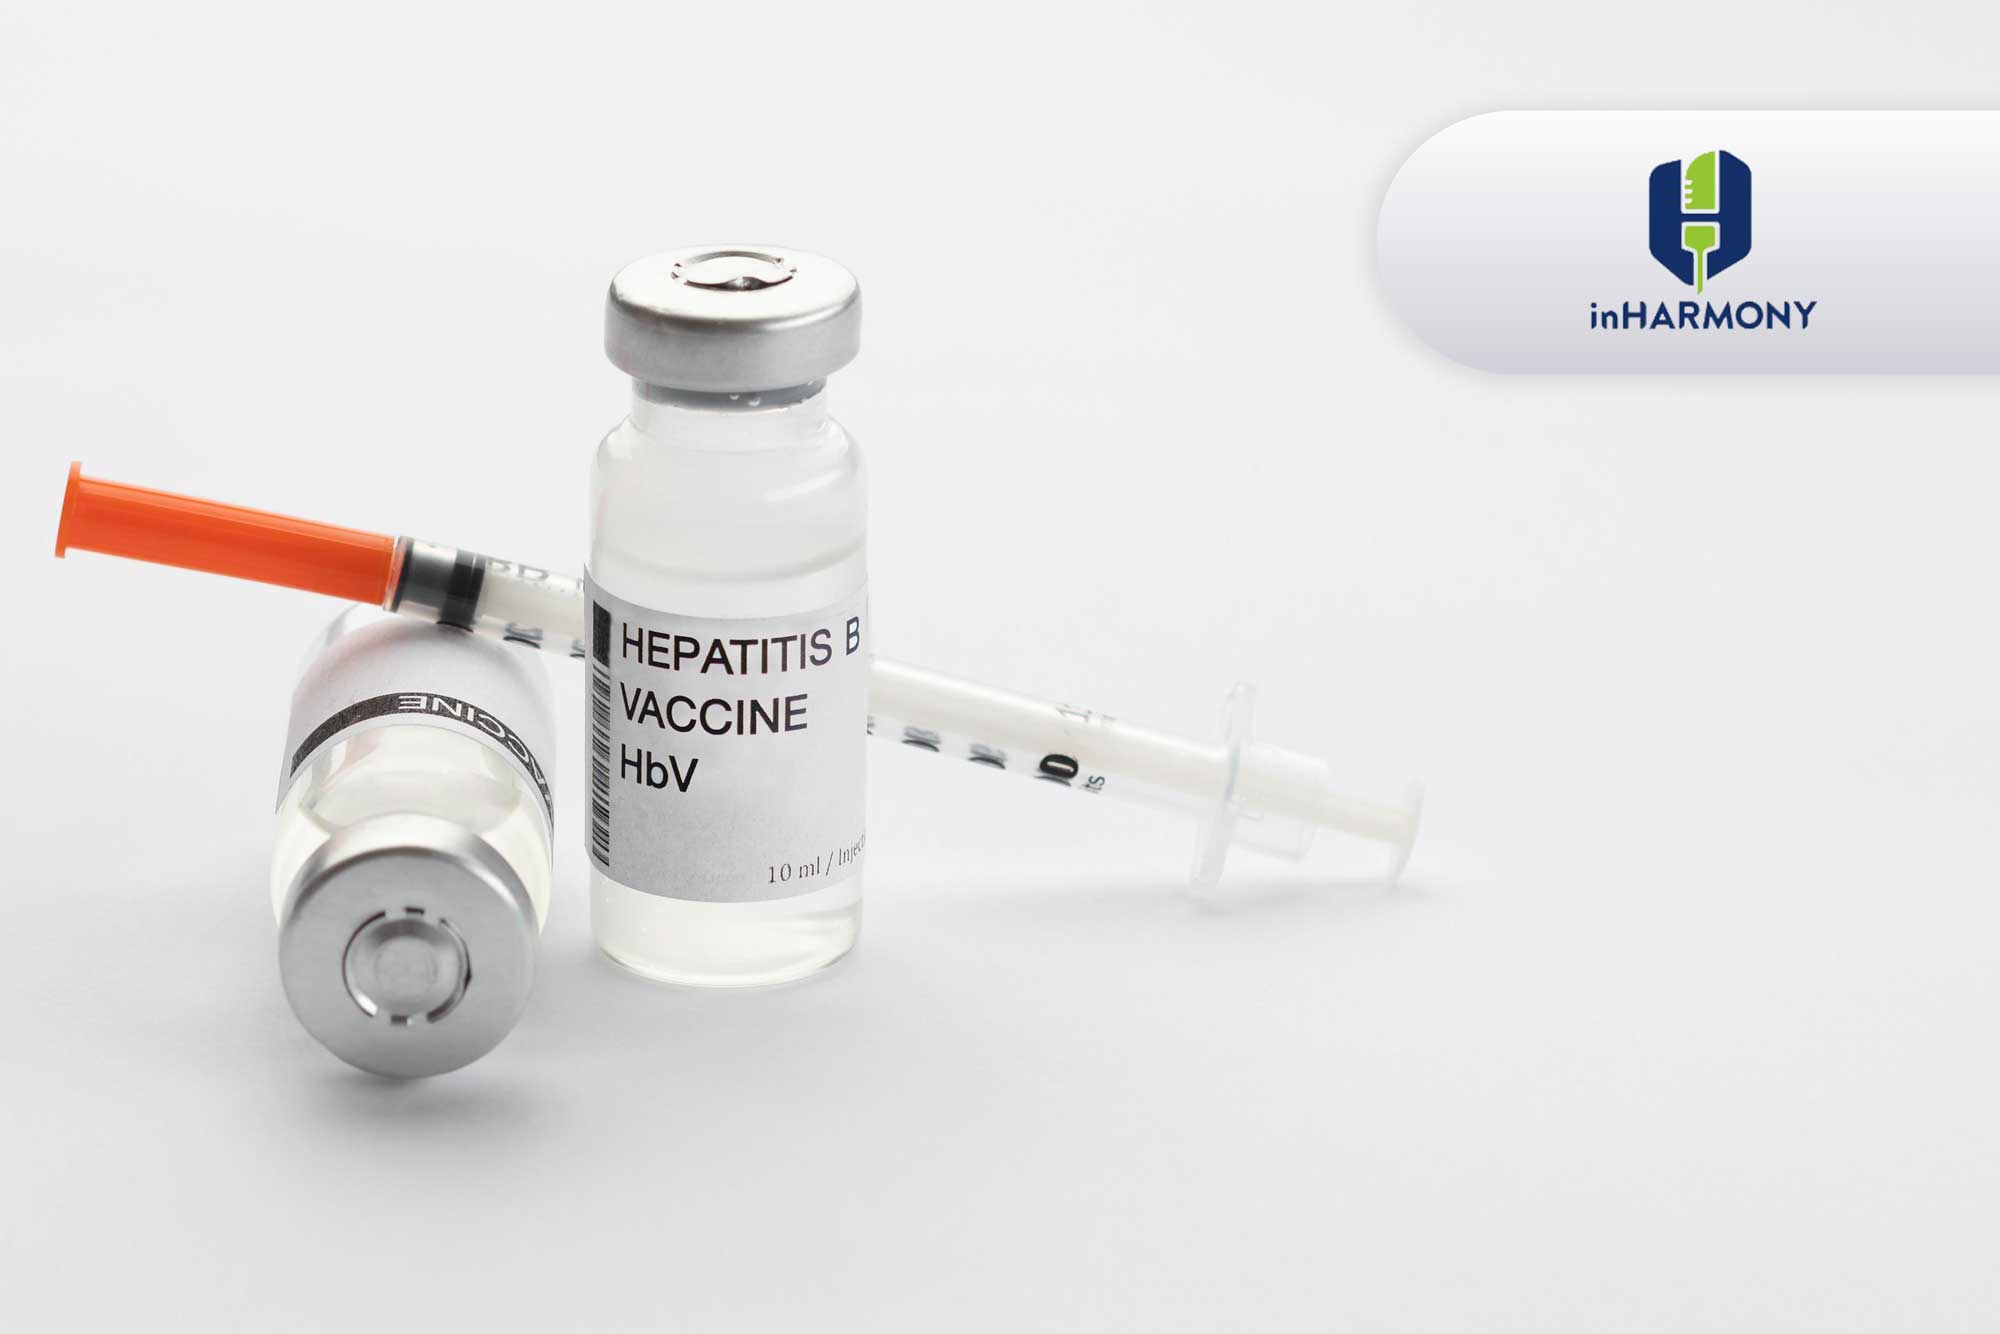 vaksin-hepatitis-B-inharmony_1691388389.jpg